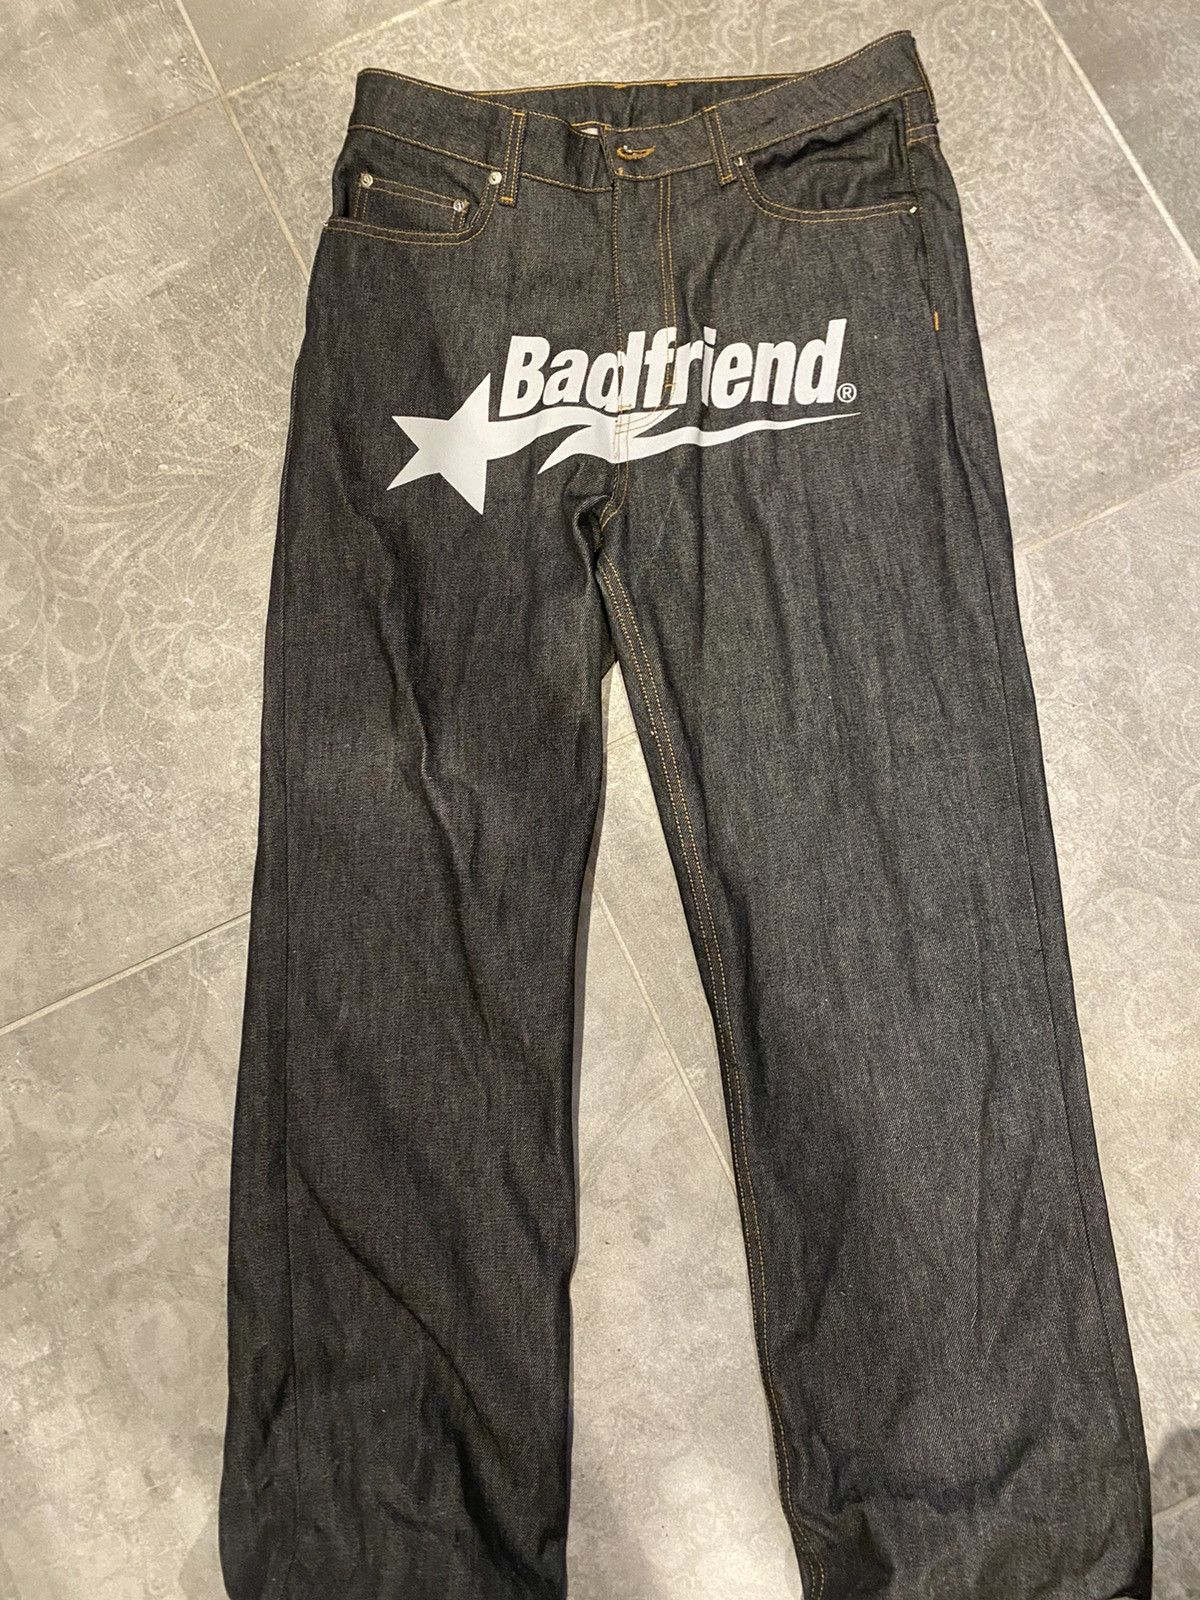 Badfriend Rare Badfriend jeans Bad Friend | Grailed